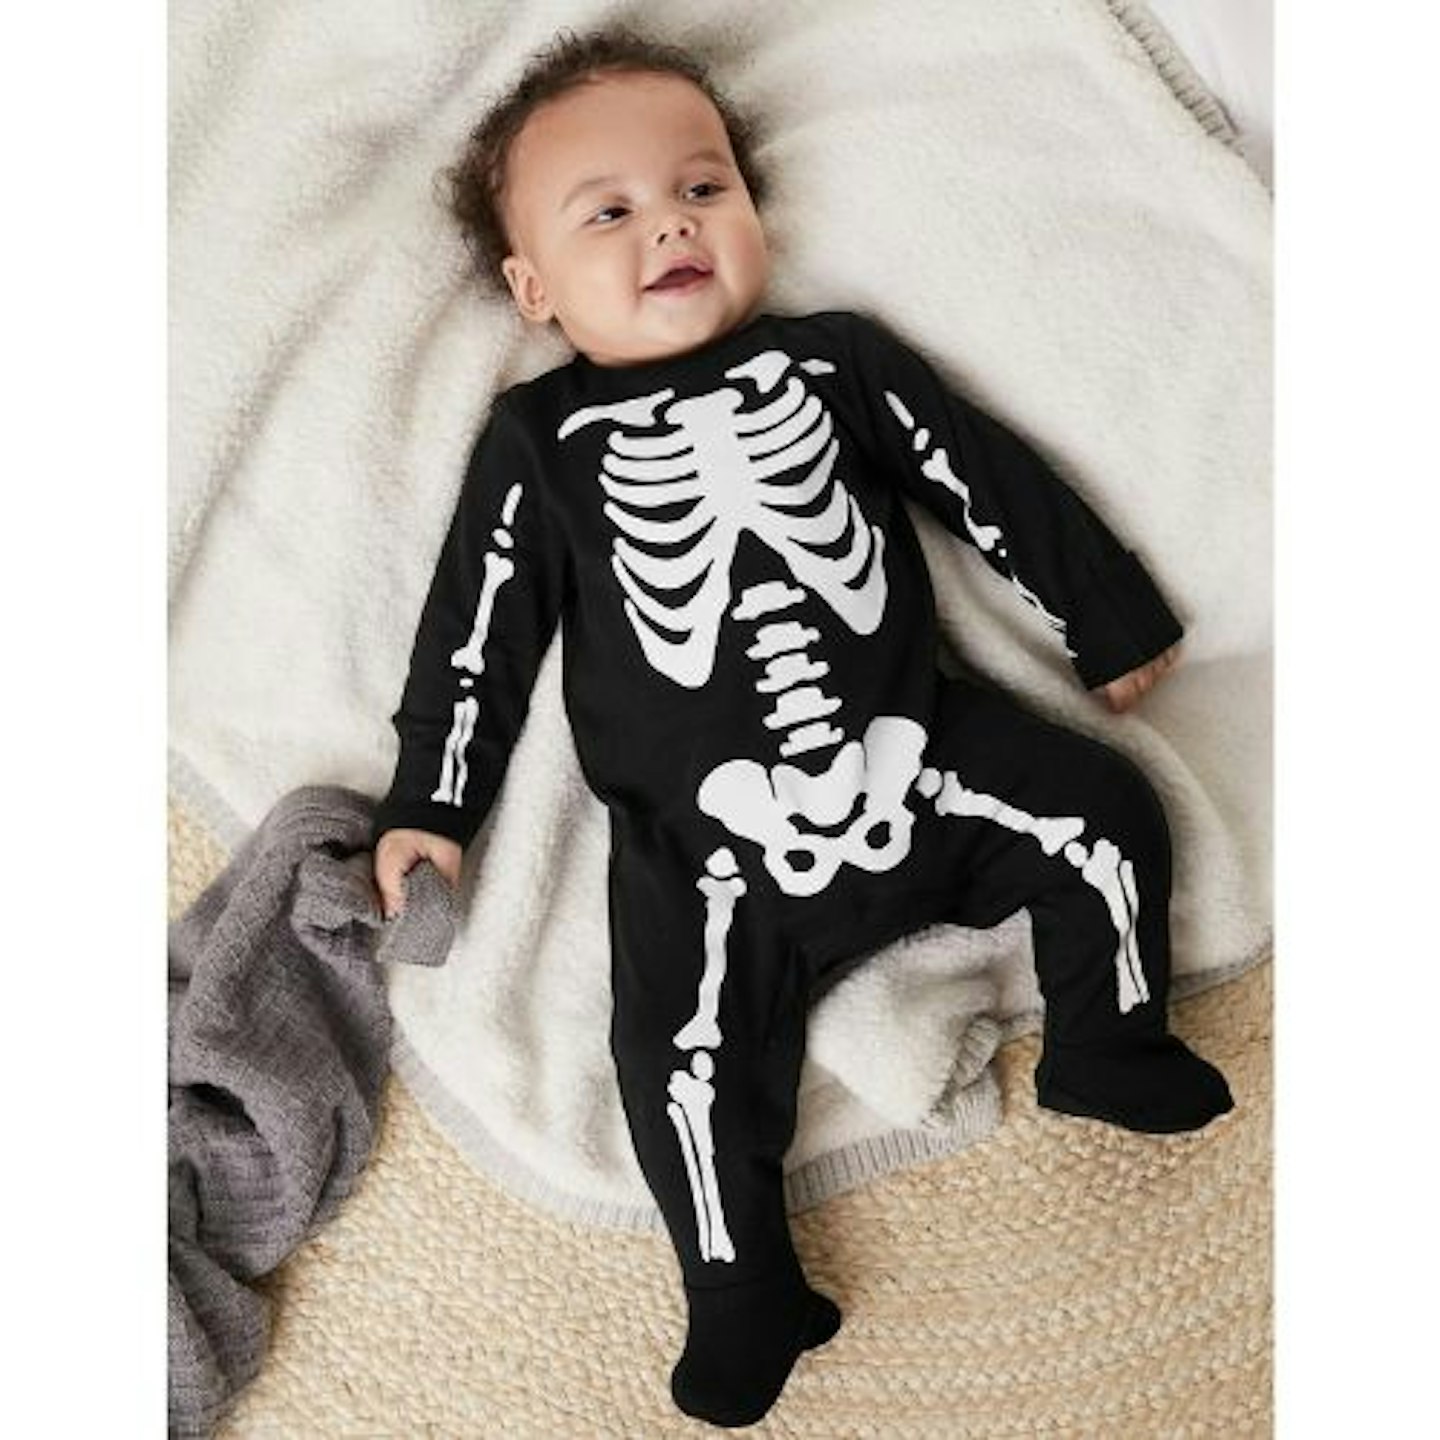 The Best Baby Halloween Costumes: Pure Cotton Skeleton Sleepsuit 